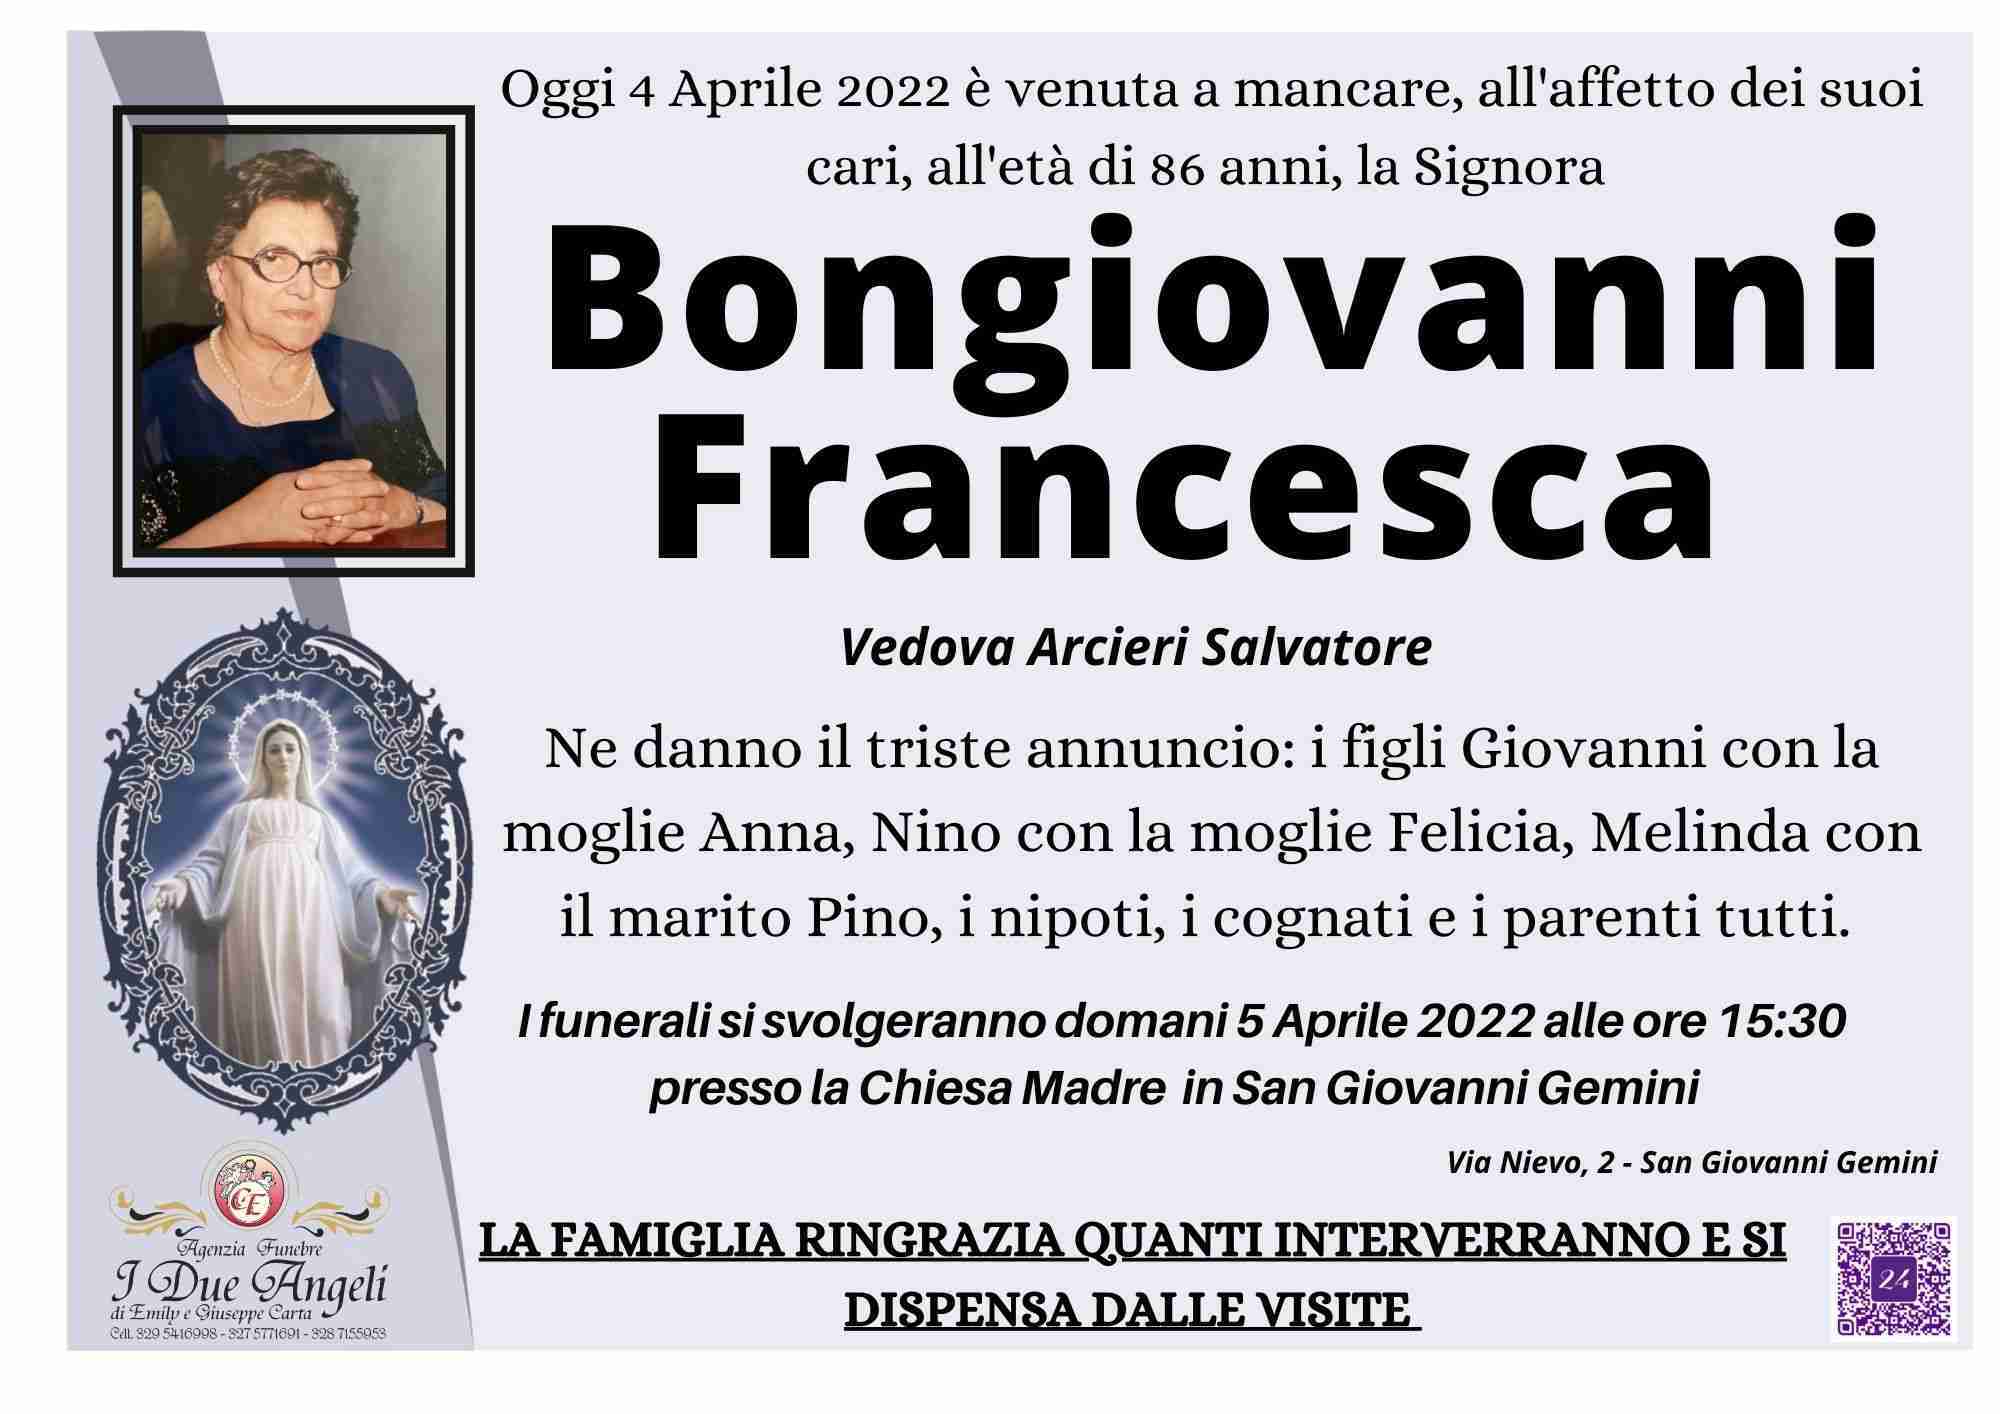 Francesca Bongiovanni